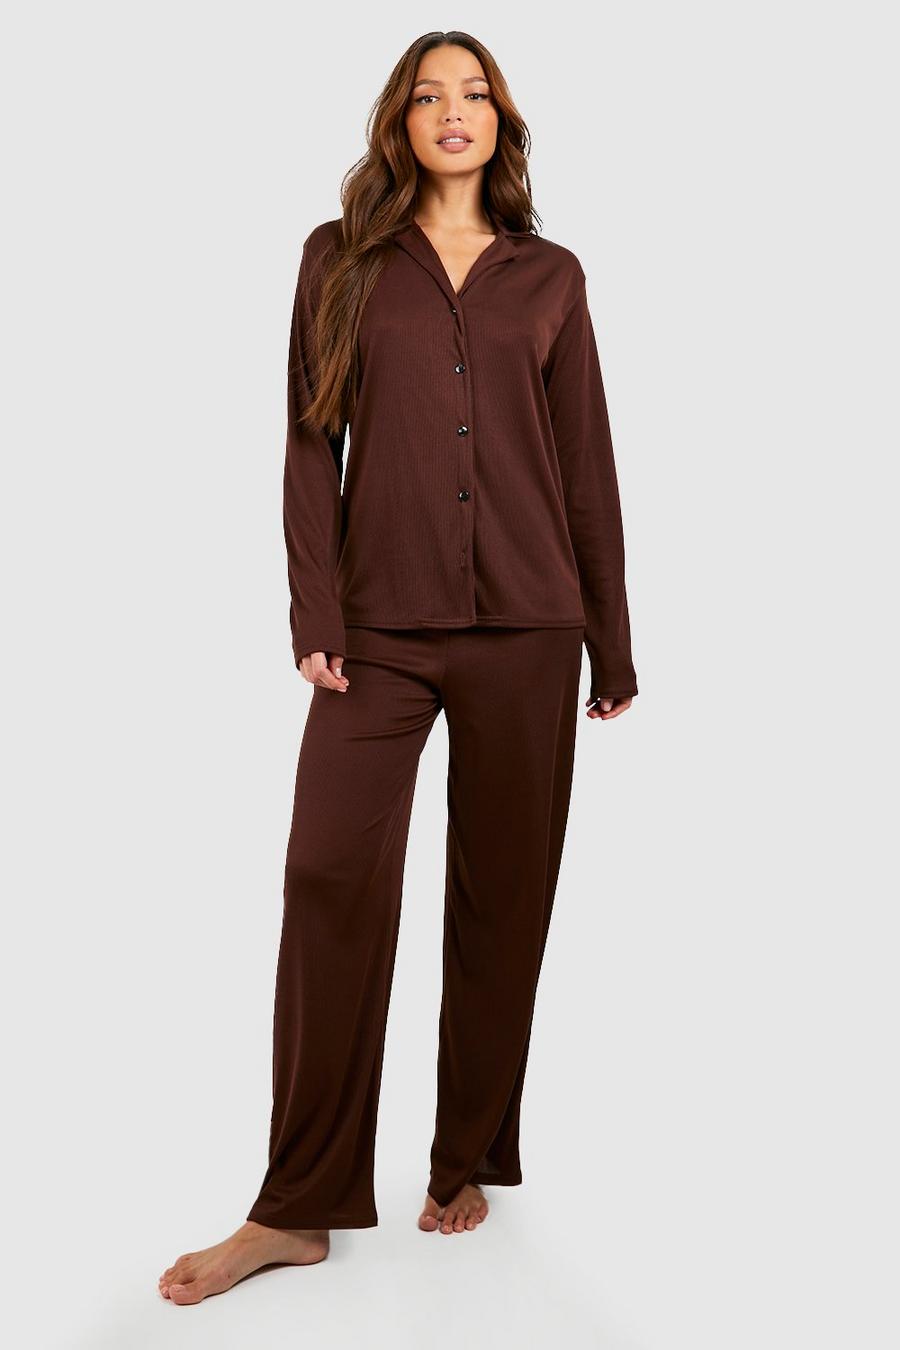 Chocolate Tall Rib Jersey Knit Long Sleeve Pajama Shirt